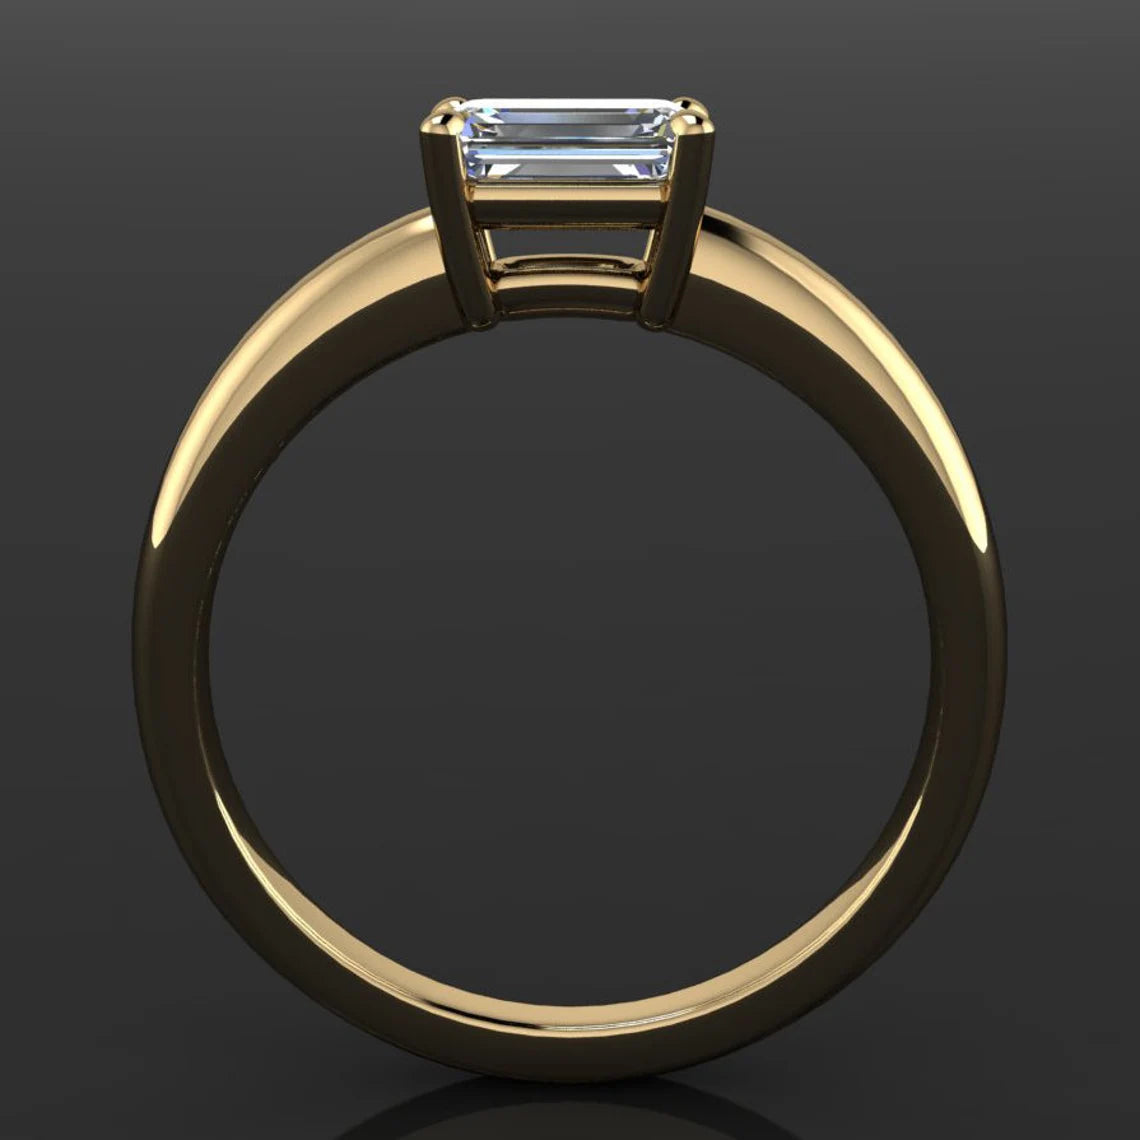 ABHINAV DIAMONDS Round Real Diamond Engagement Rings, Size: 14 at Rs 20000  in Mumbai